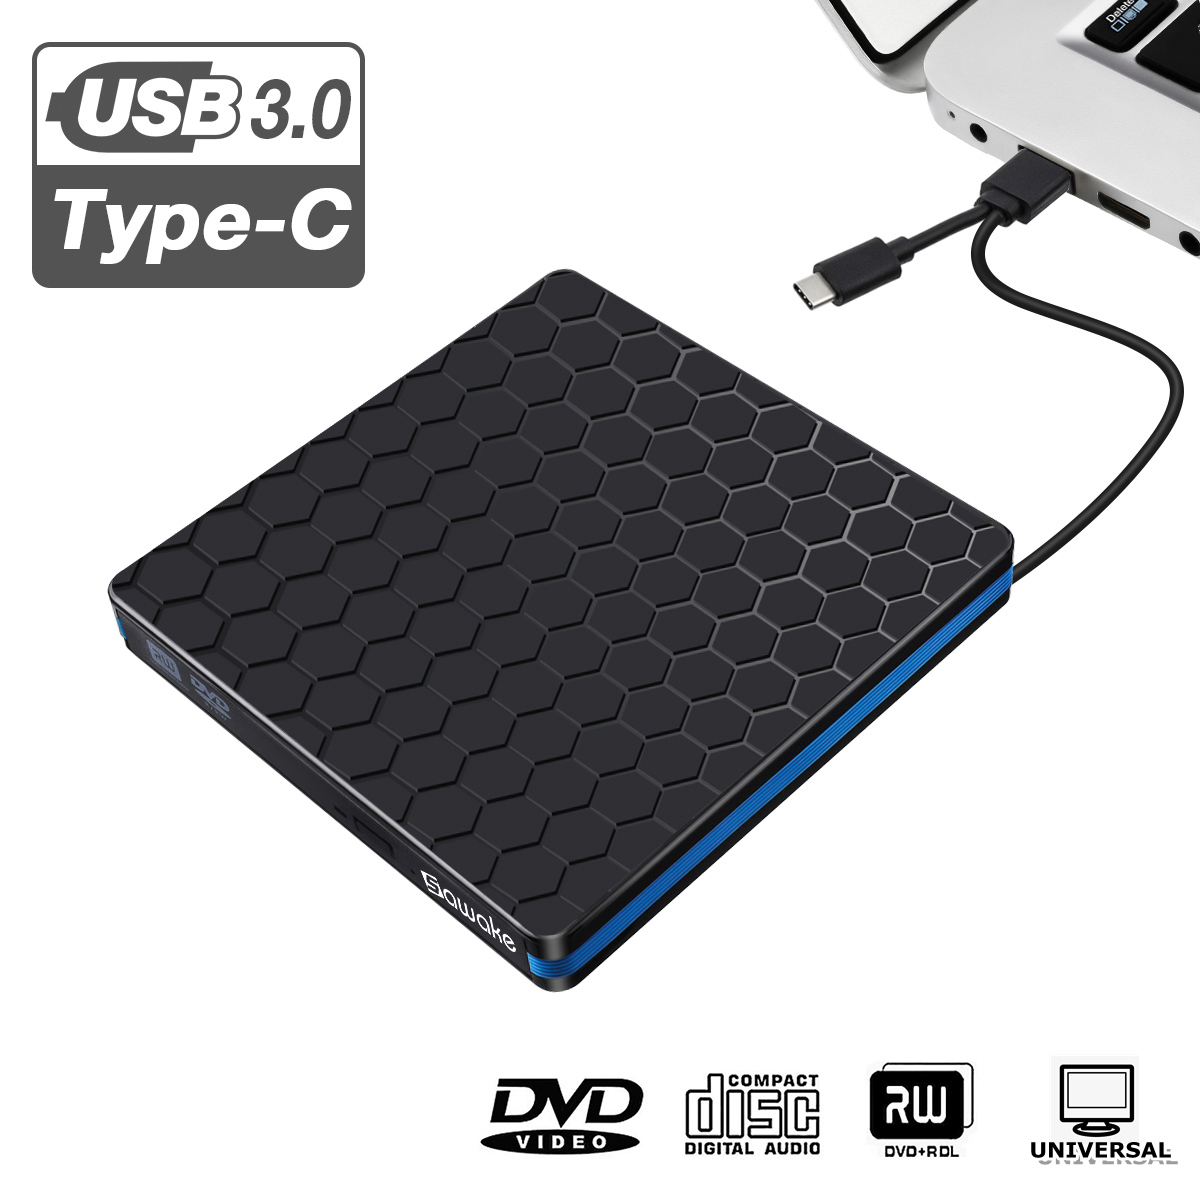 USB-30-Type-C-External-CD-DVD-Drive-Dual-Port-DVD-RW-Player-Portable-Optical-Drive-Burner-Writer-Rew-1704585-1